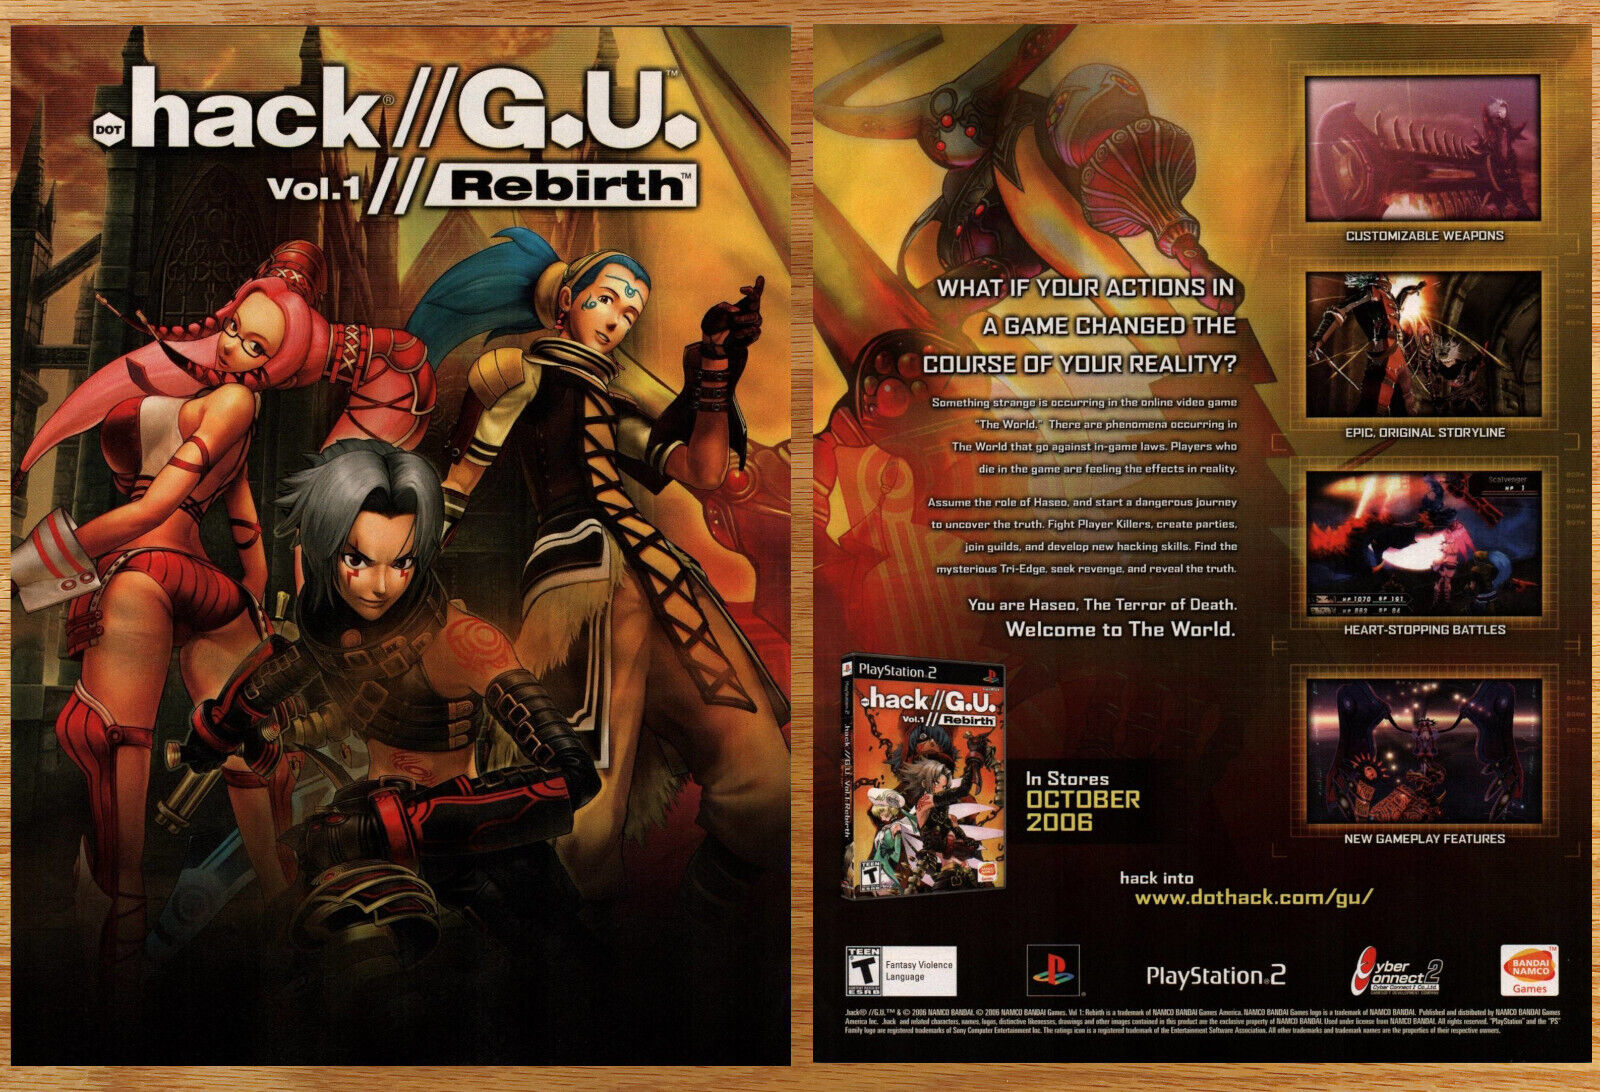 Dot Hack G.U. Vol 1 Rebirth - 2 Page Video Game Print Ad / Poster Promo Art 2006